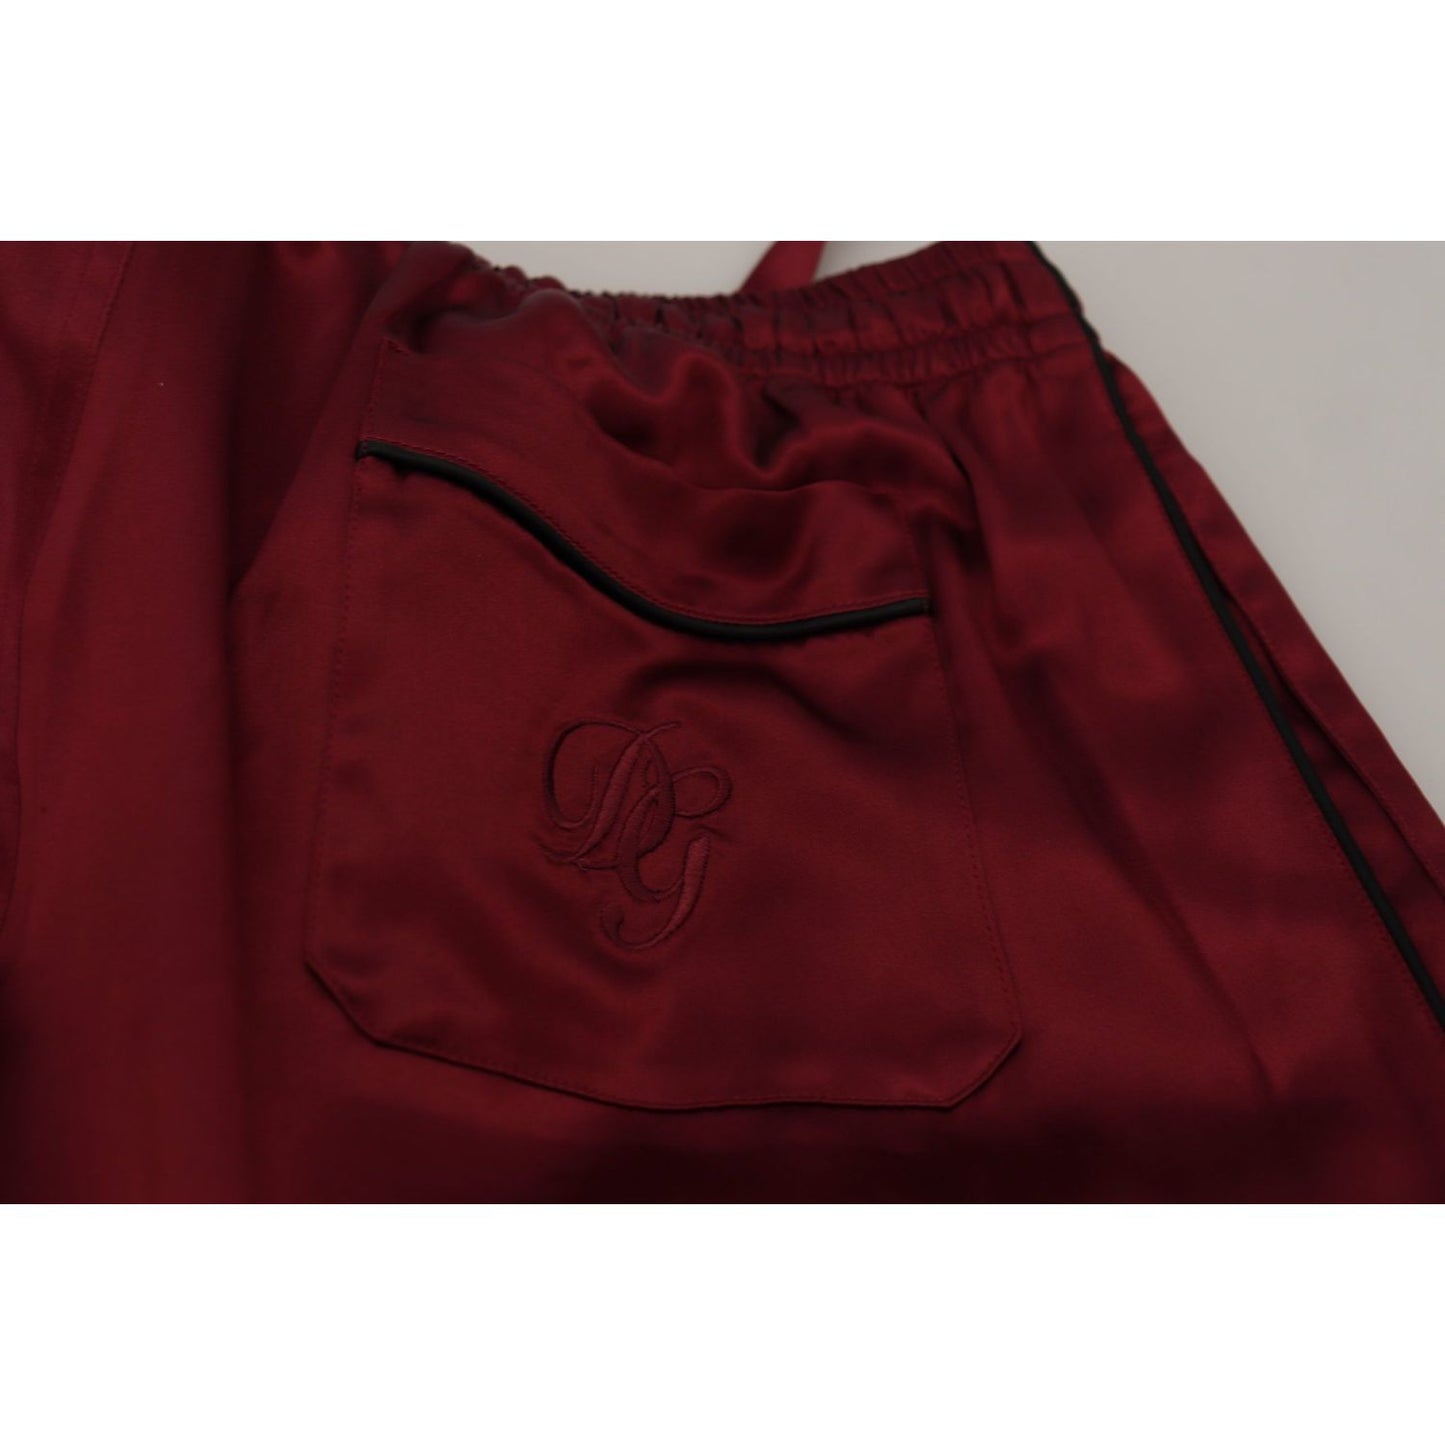 Dolce & Gabbana Silk Lounge Pants in Bordeaux Jeans & Pants bordeaux-silk-dg-sleep-lounge-pants